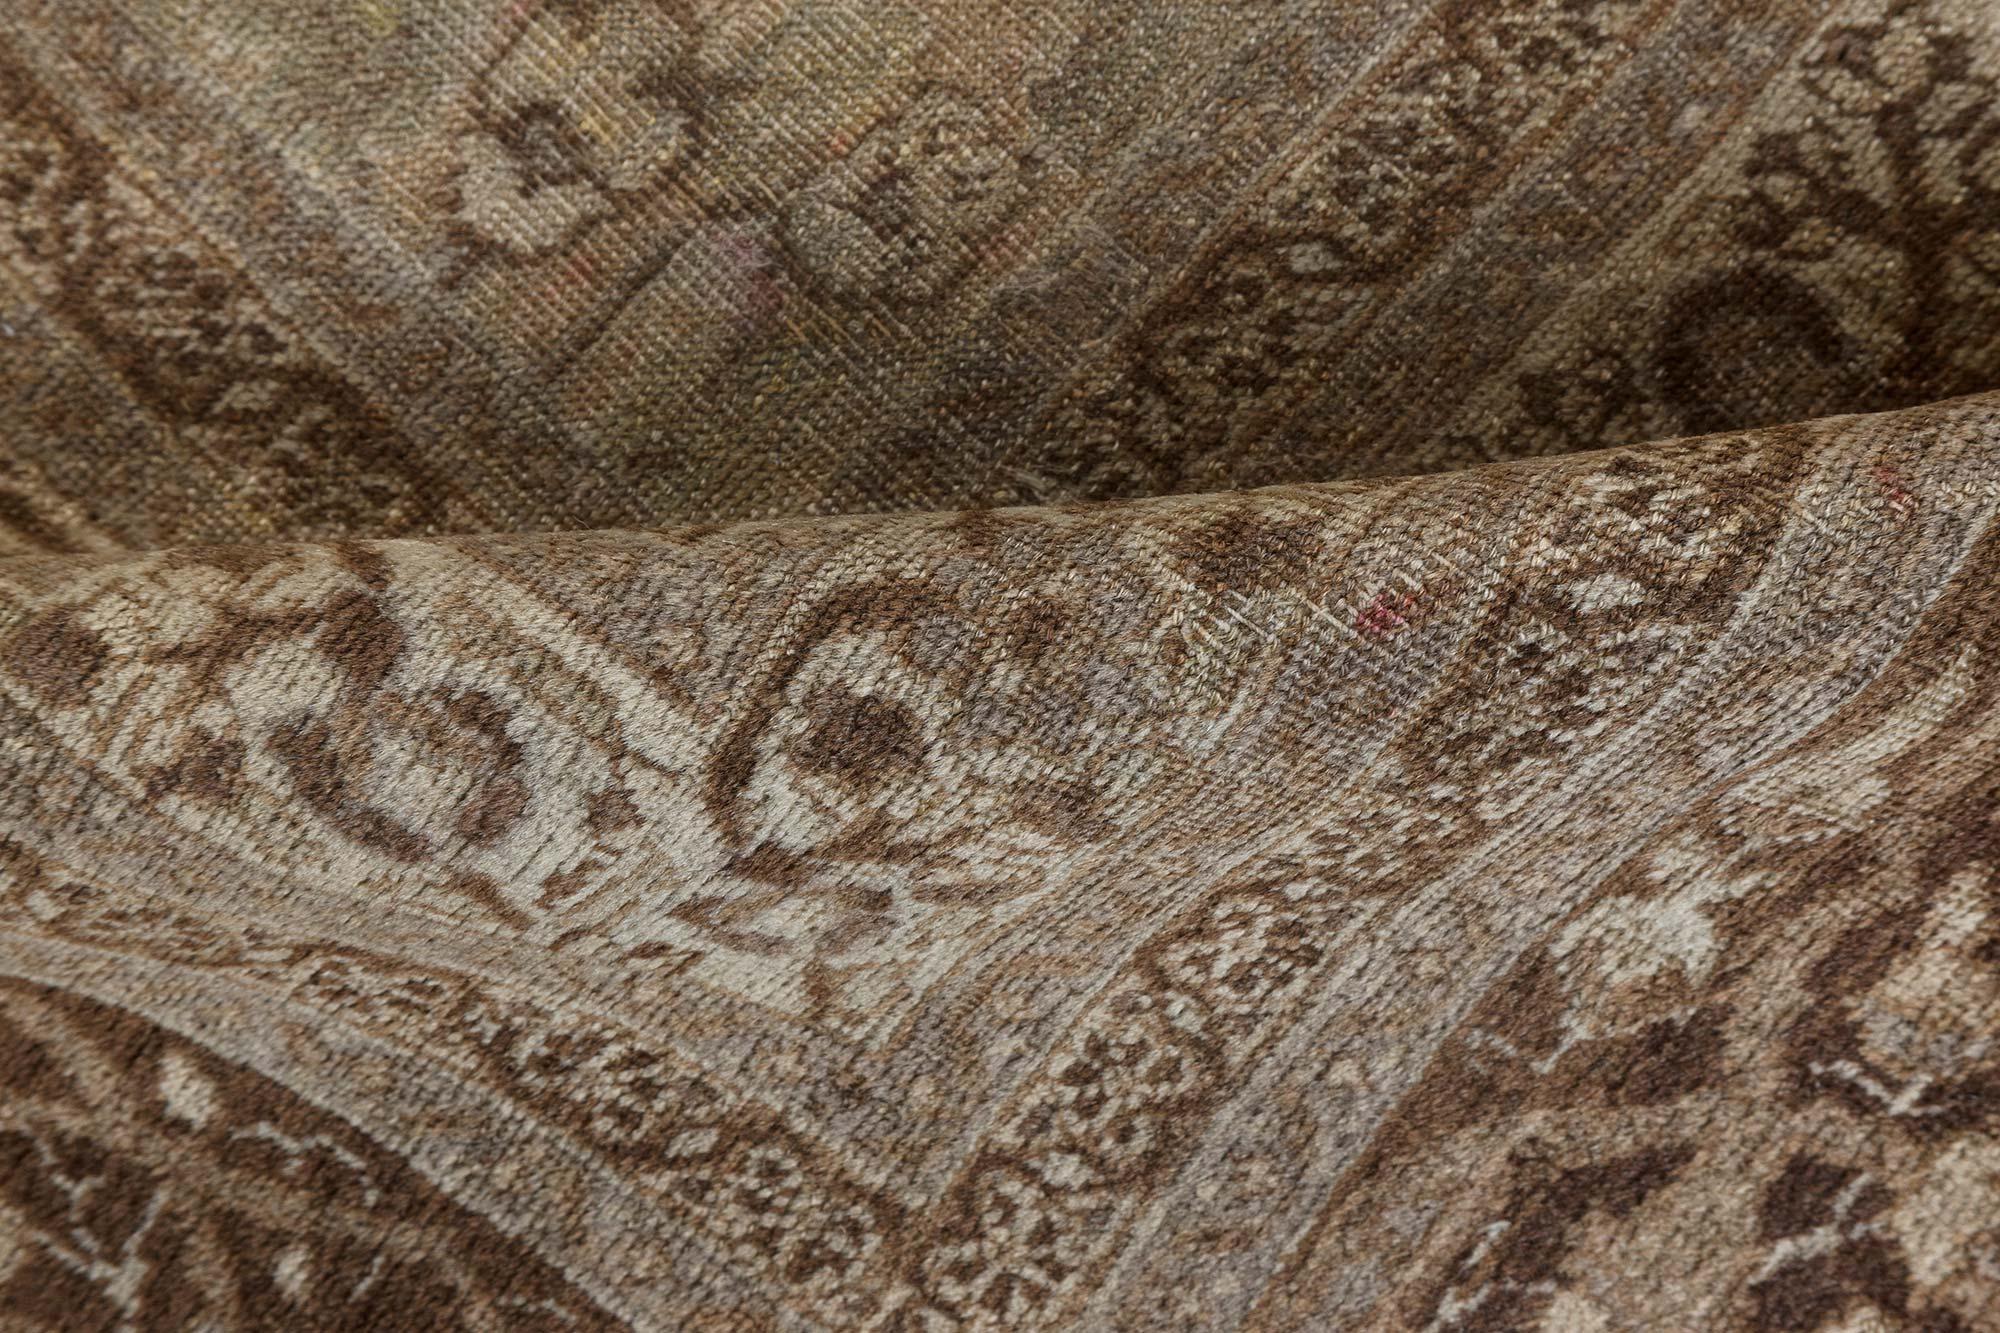 Authentic 19th Century Persian Tabriz Botanic Beige Brown Carpet
Size: 11'5